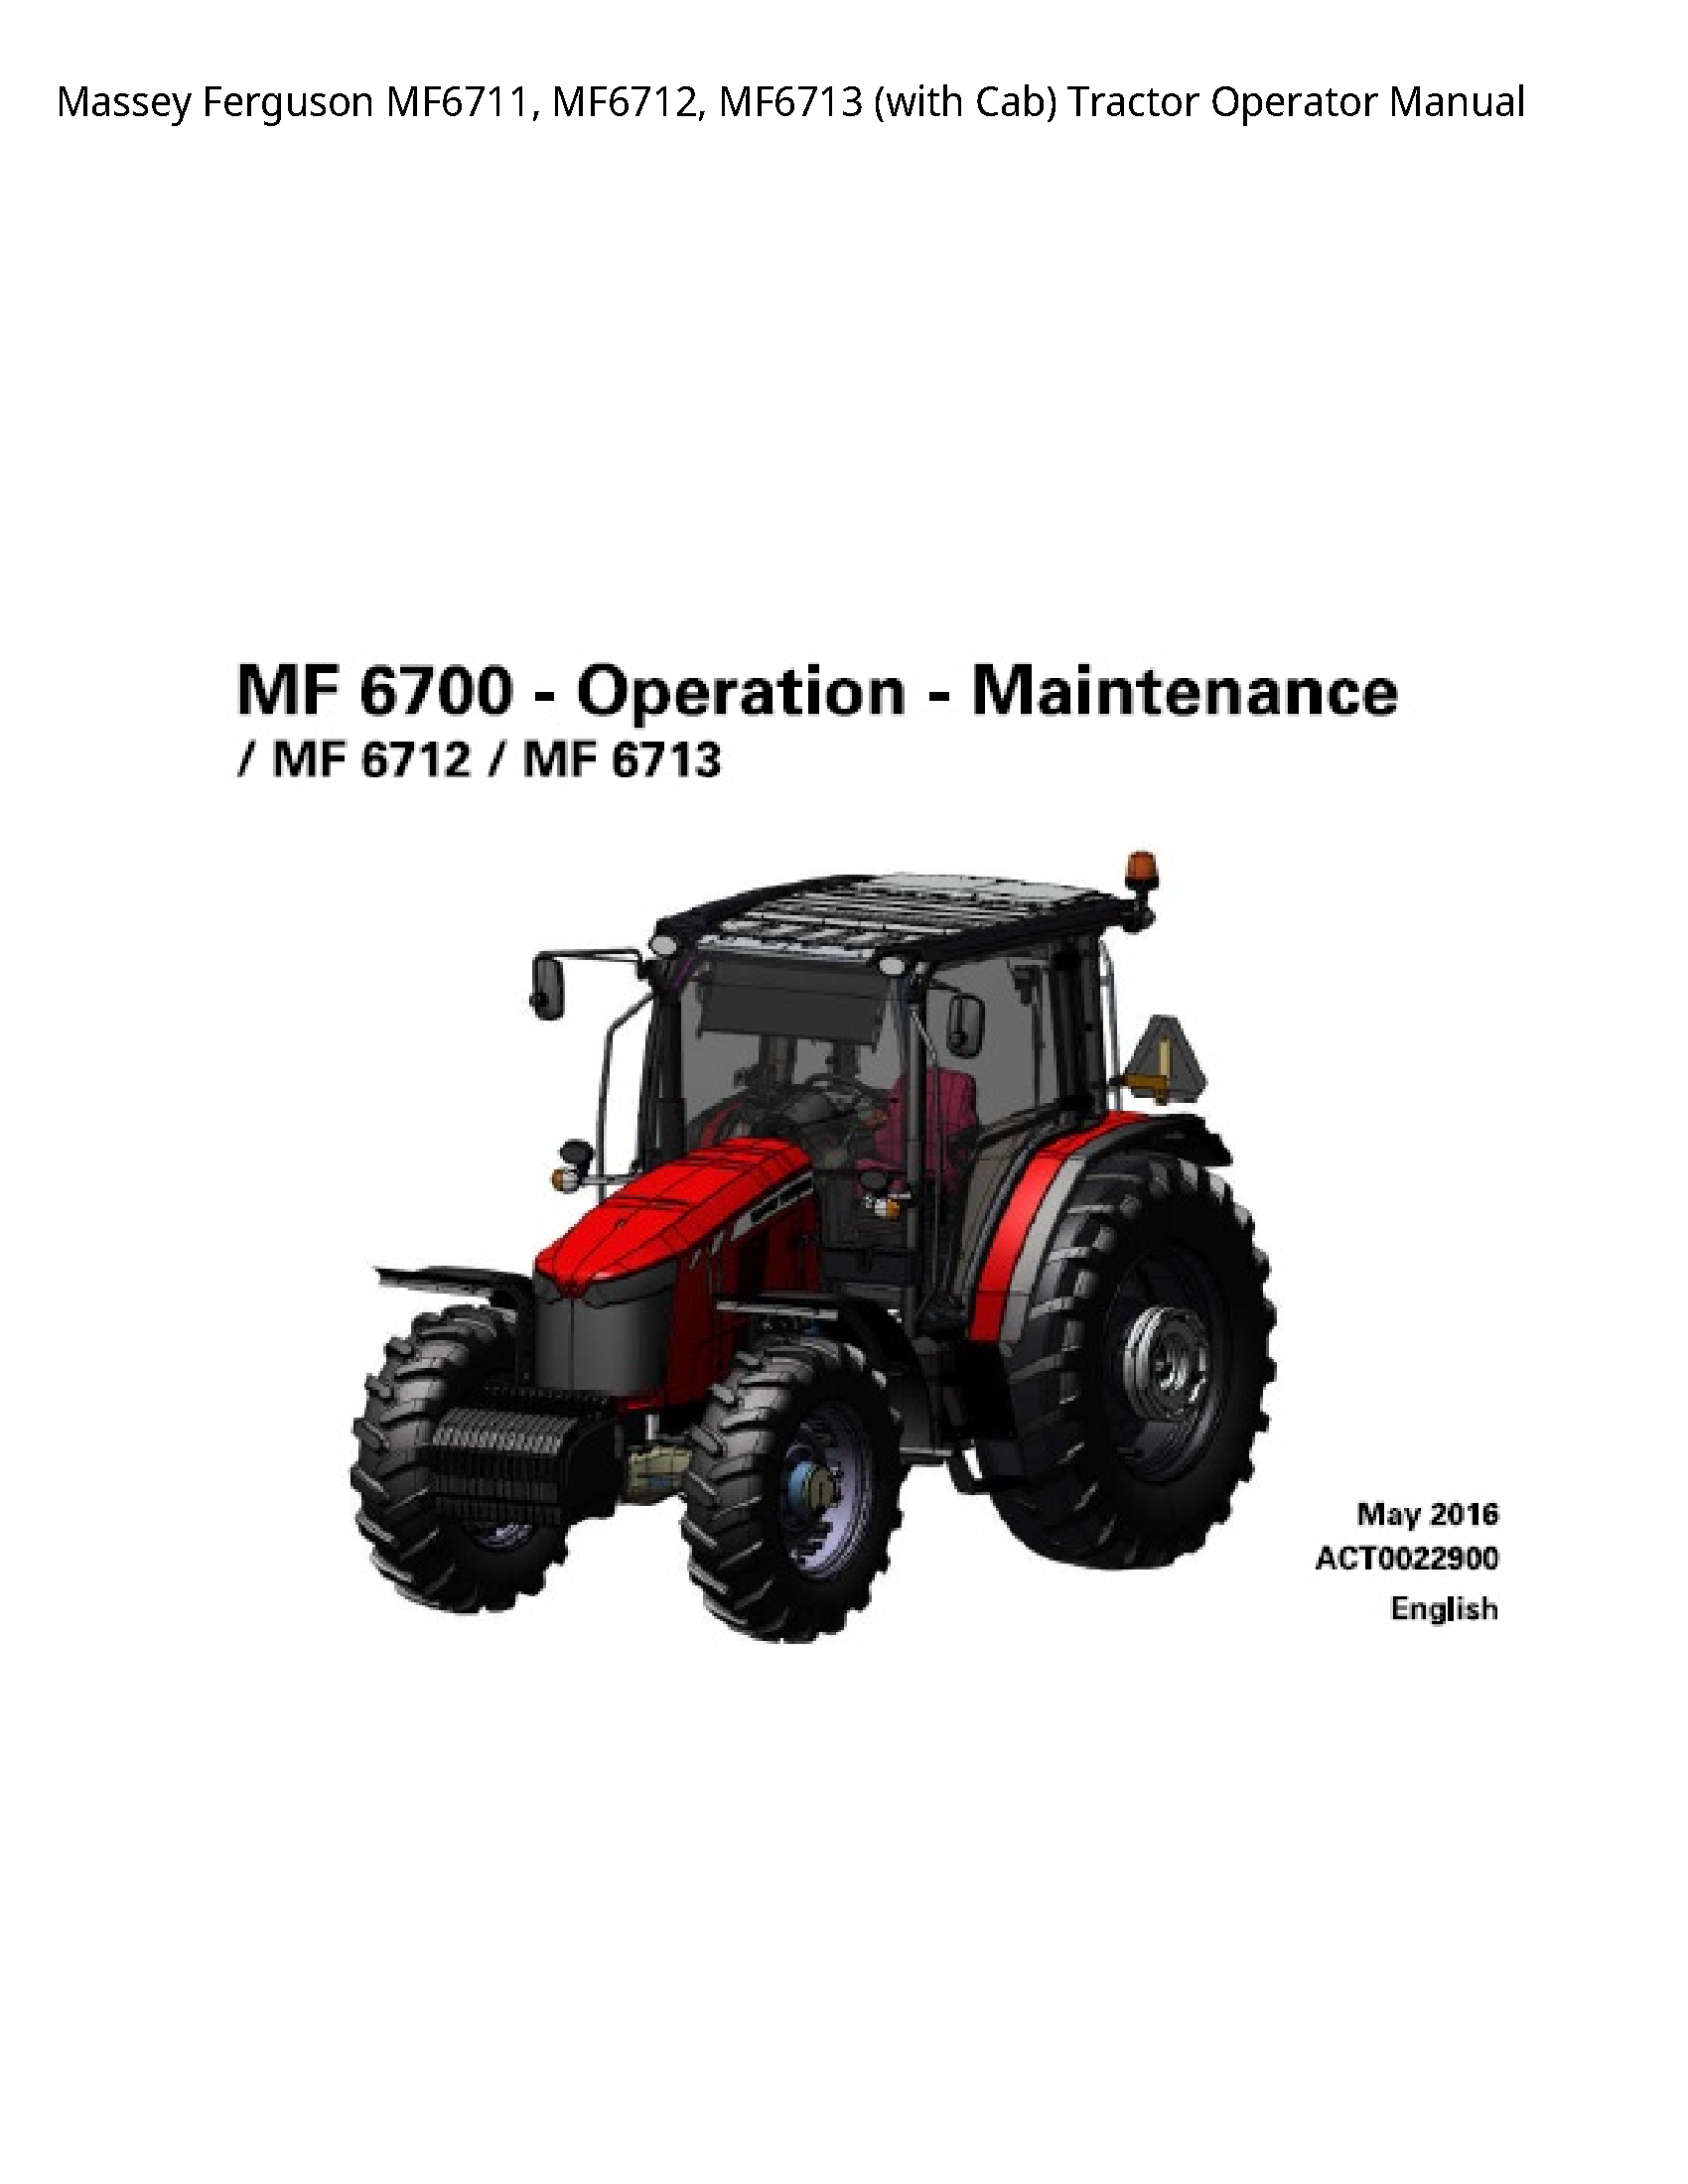 Massey Ferguson MF6711 (with Cab) Tractor Operator manual